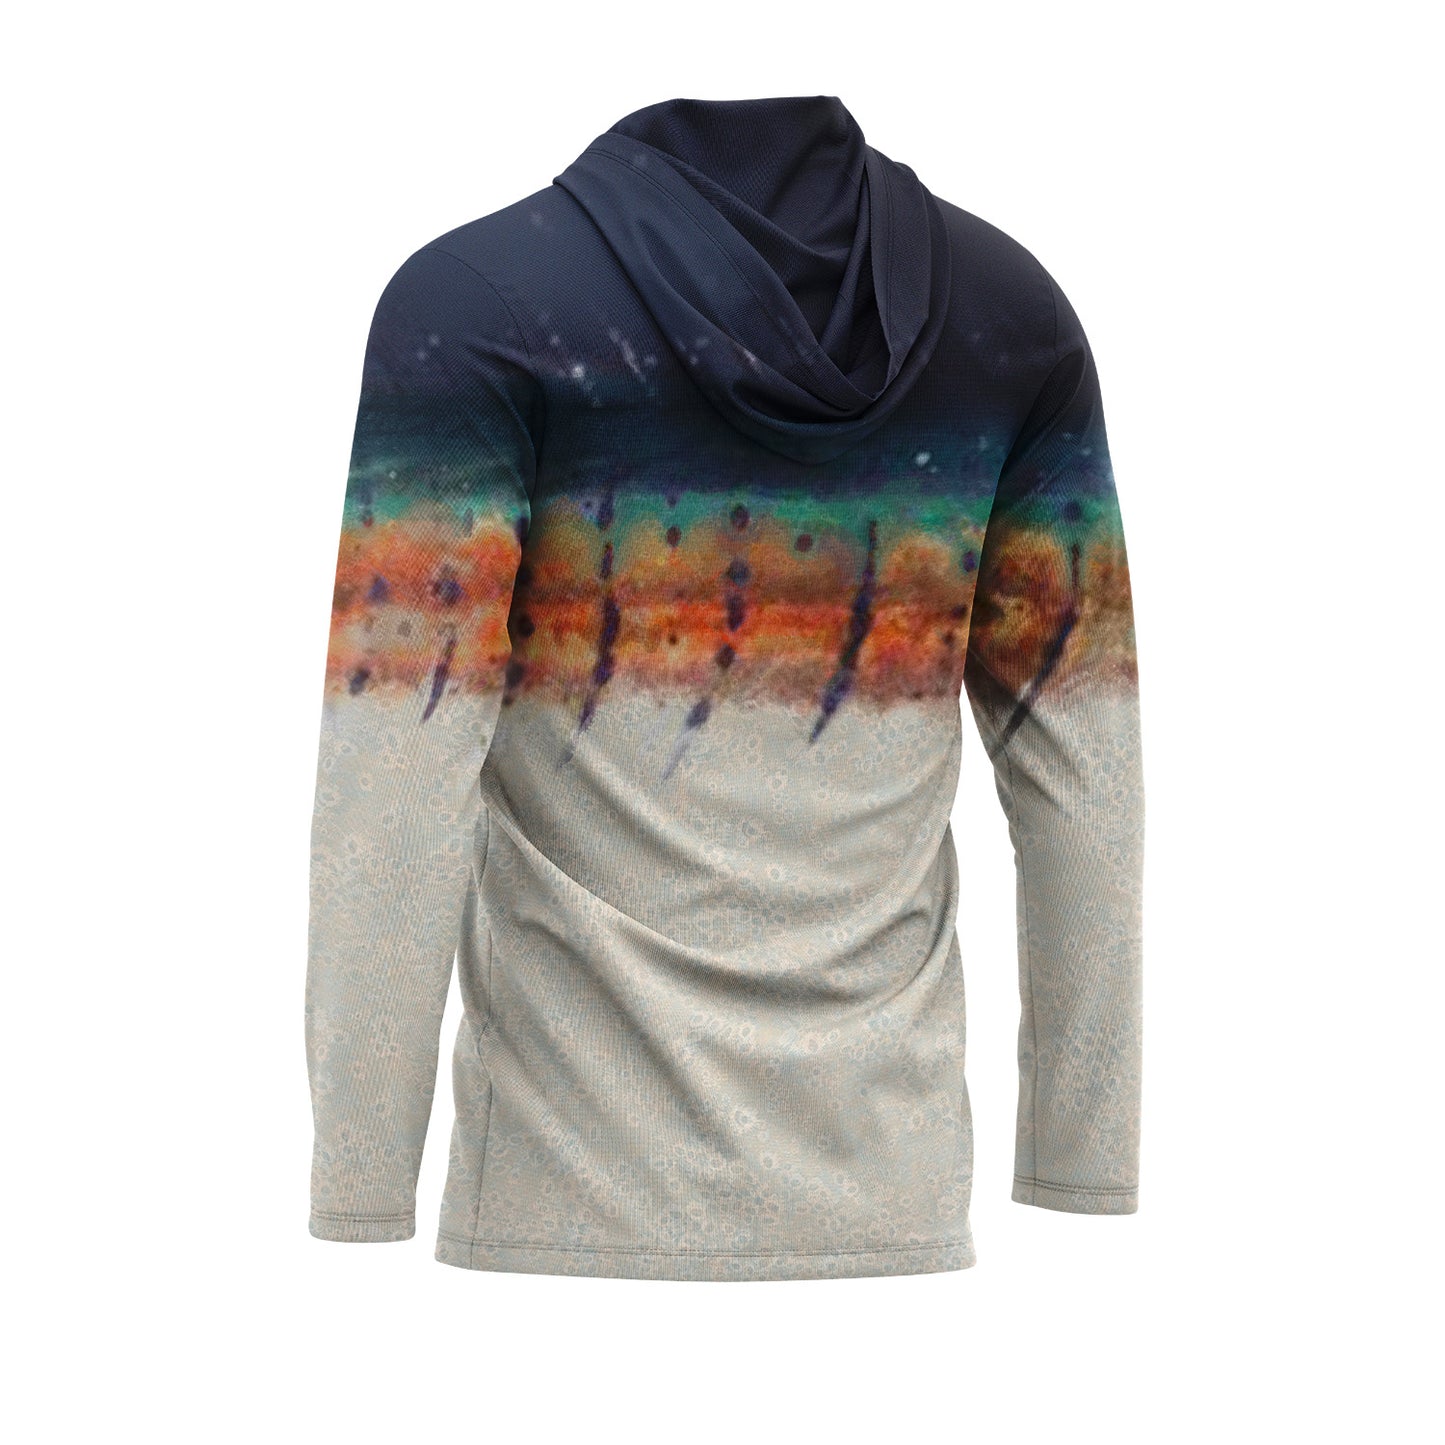 Sailfish - Men's Hooded Performance Fishing Shirt - Best Sun Shirts - Multi-Seasonal - UPF 50+ - Long Sleeve Fishing Shirt - Small